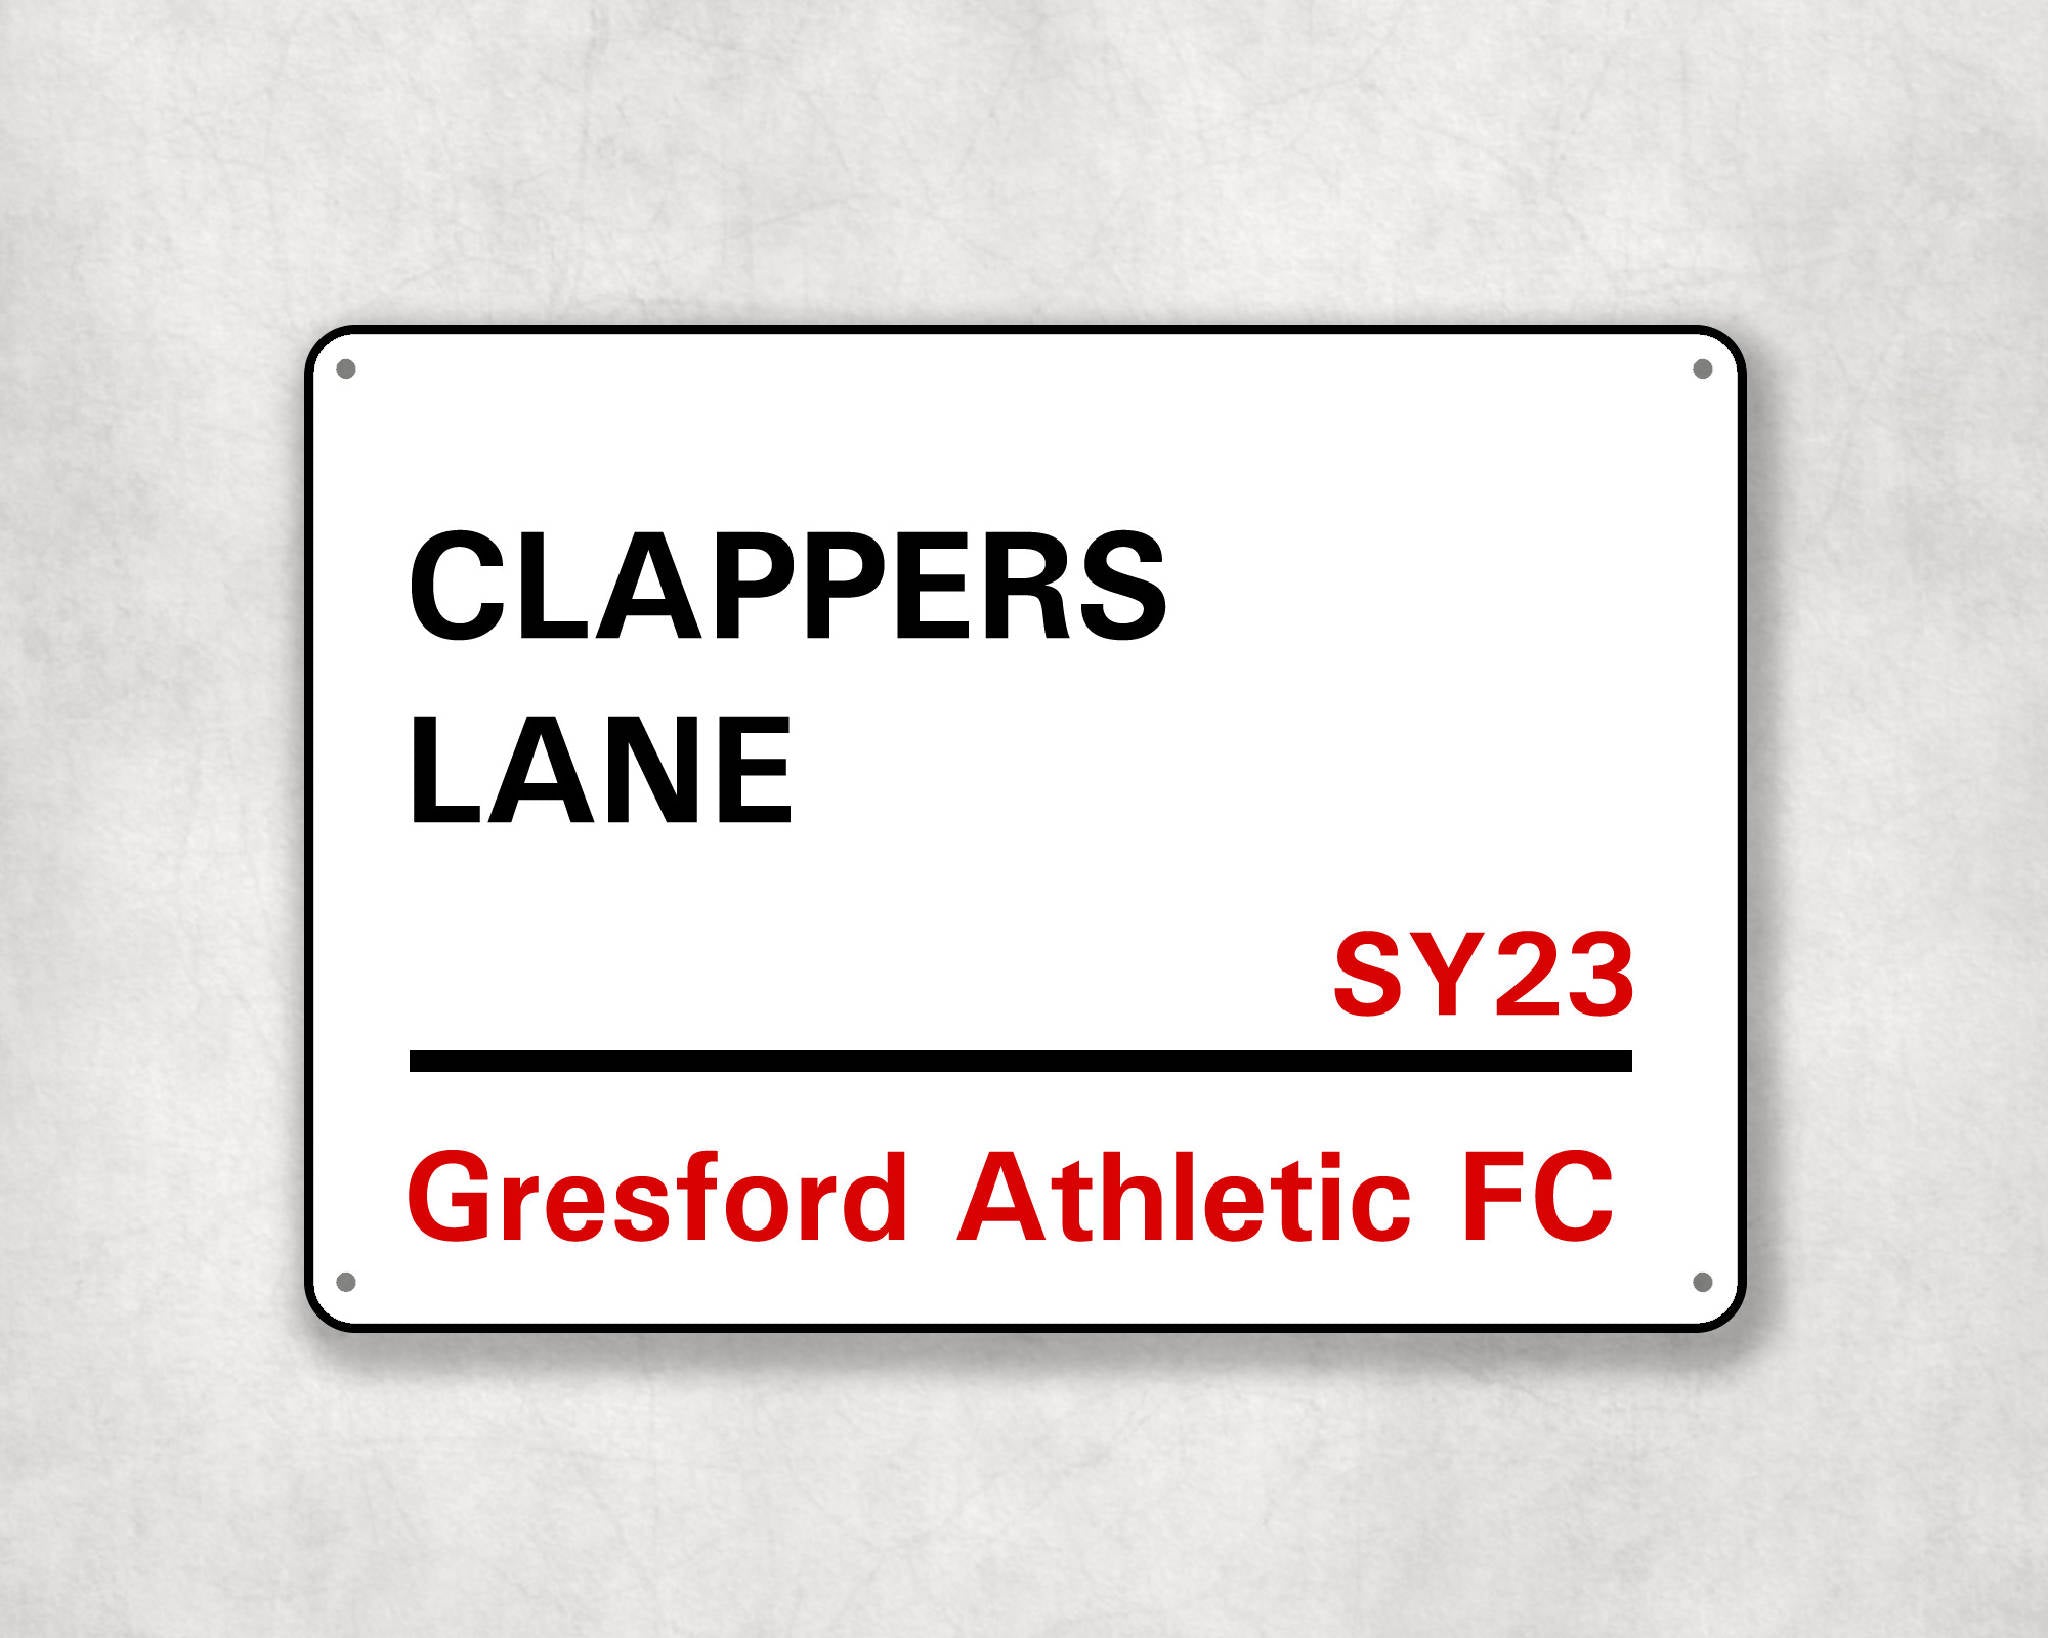 Clappers Lane - Gresford Athletic FC aluminium printed metal street sign - gift, keepsake, football gift